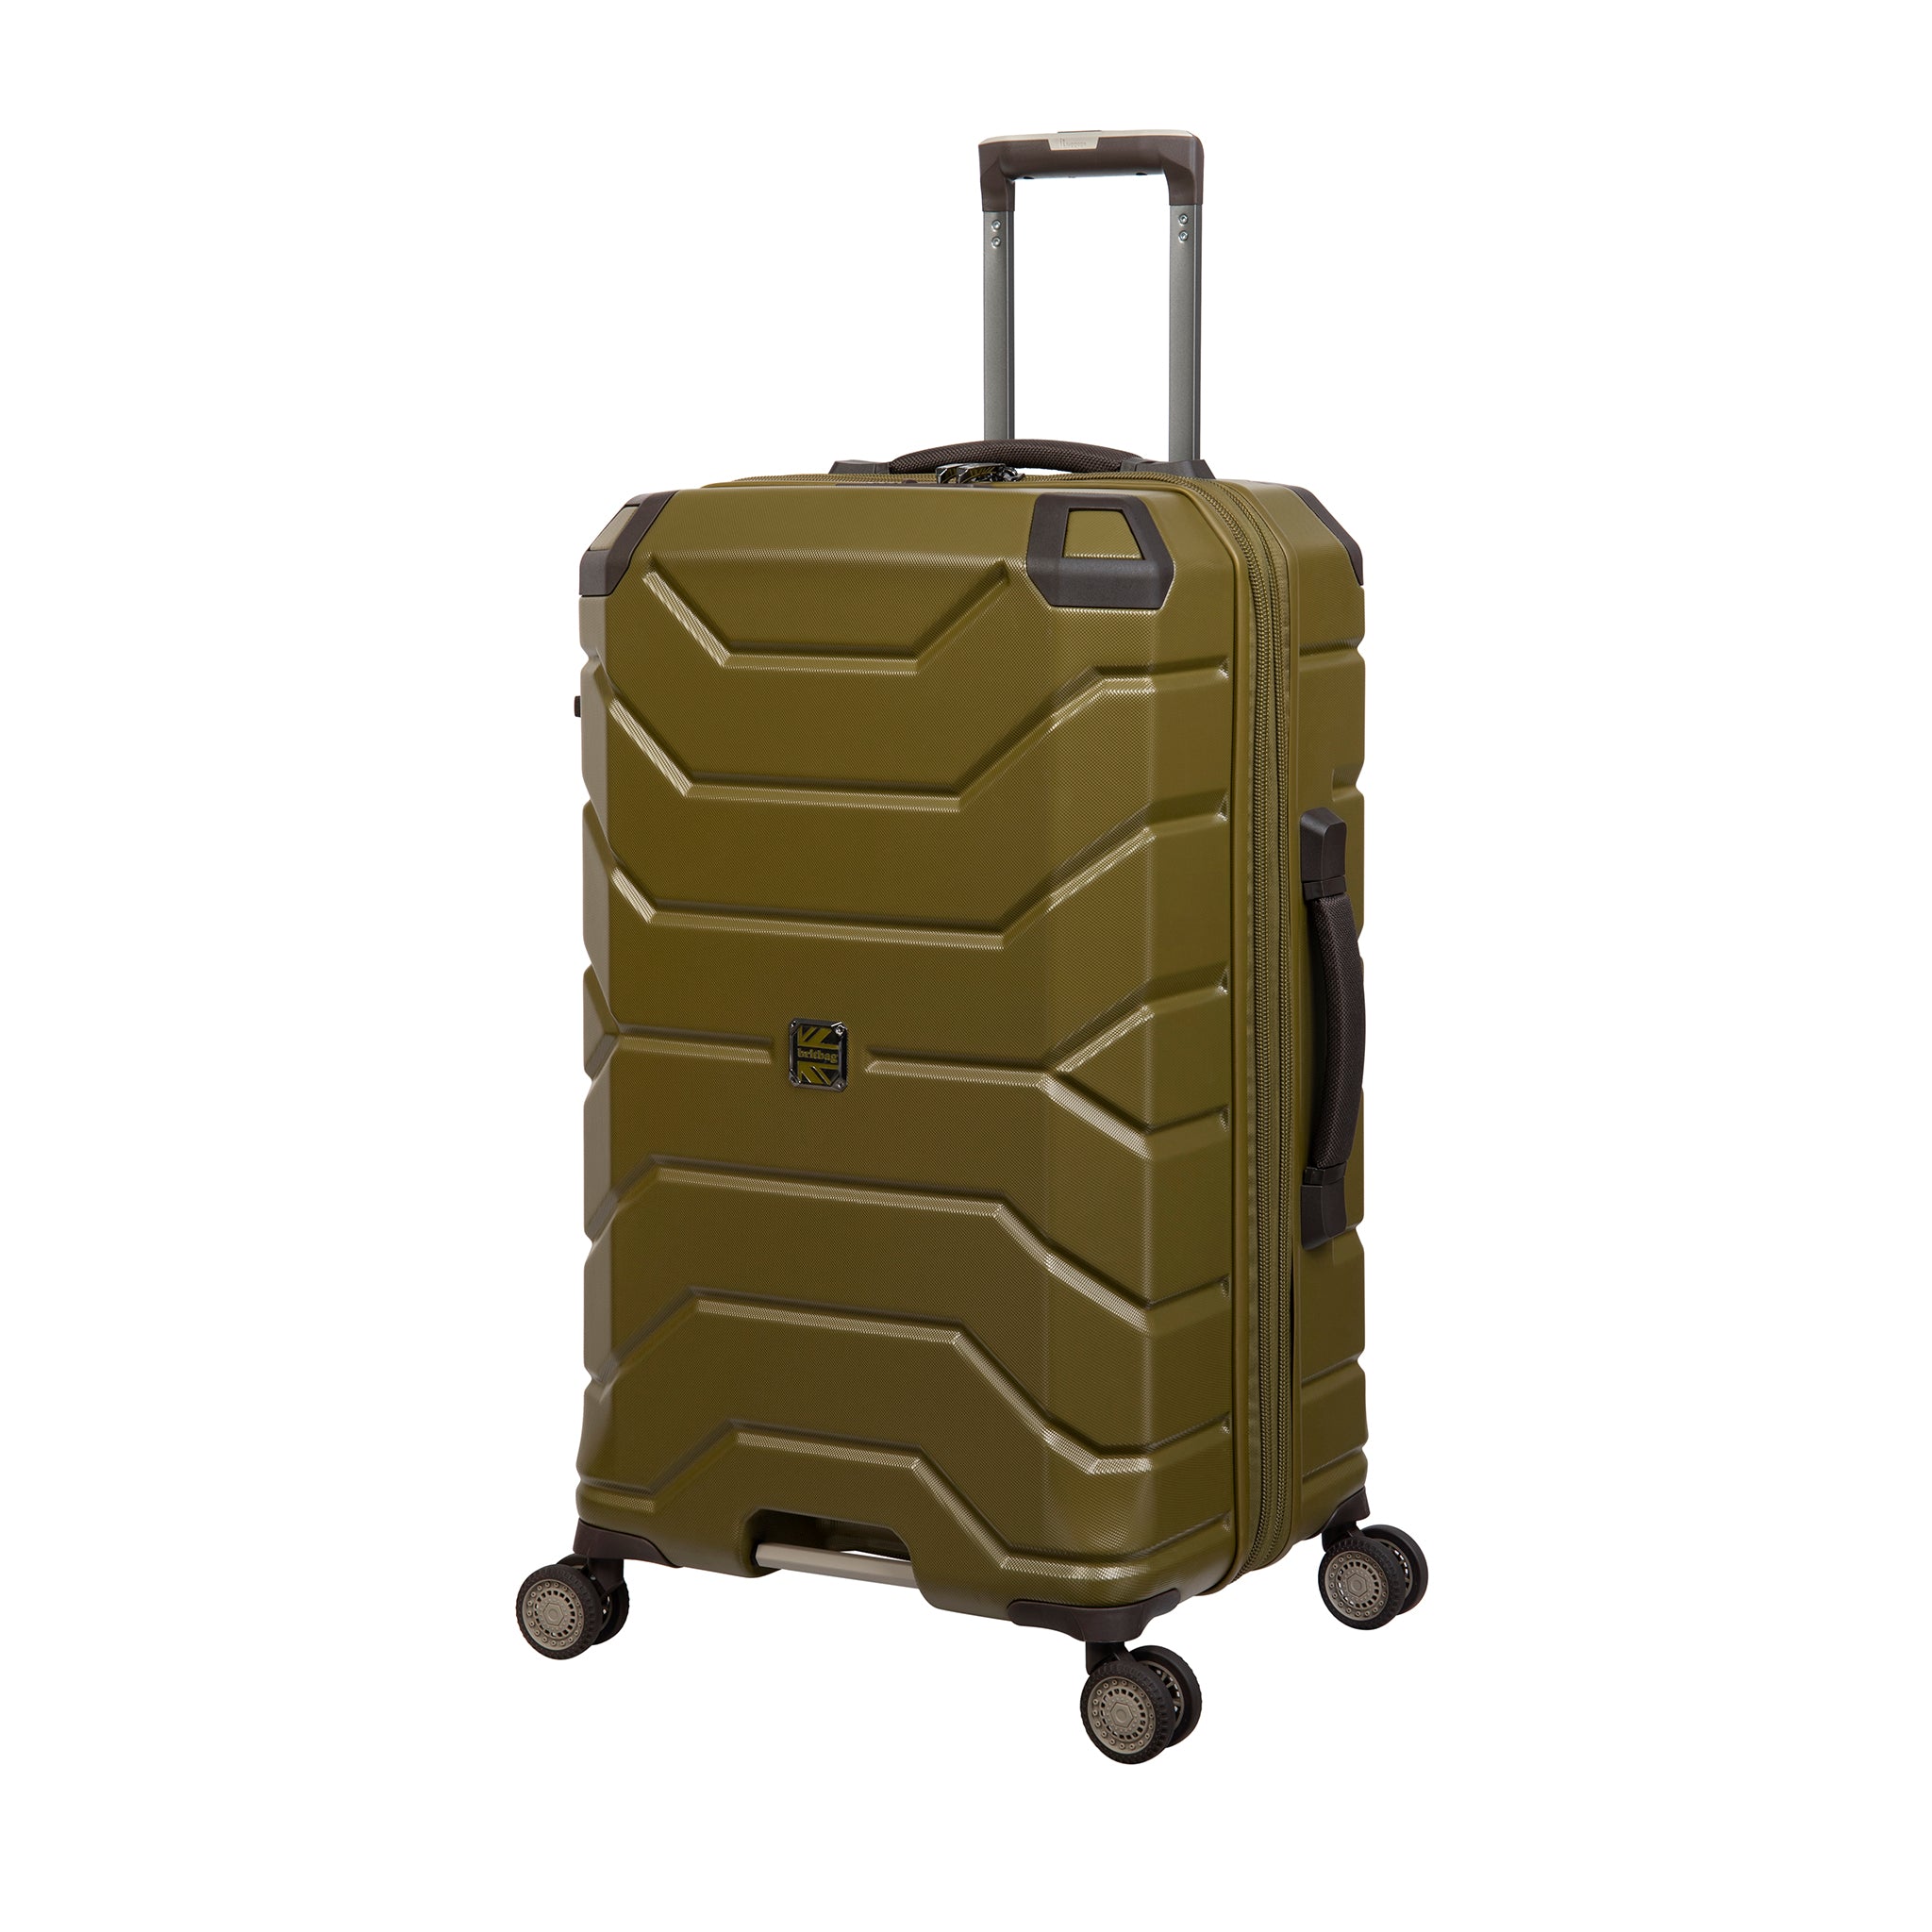 it Luggage | BRITBAG Galloway - Medium Plus in Olive Nut